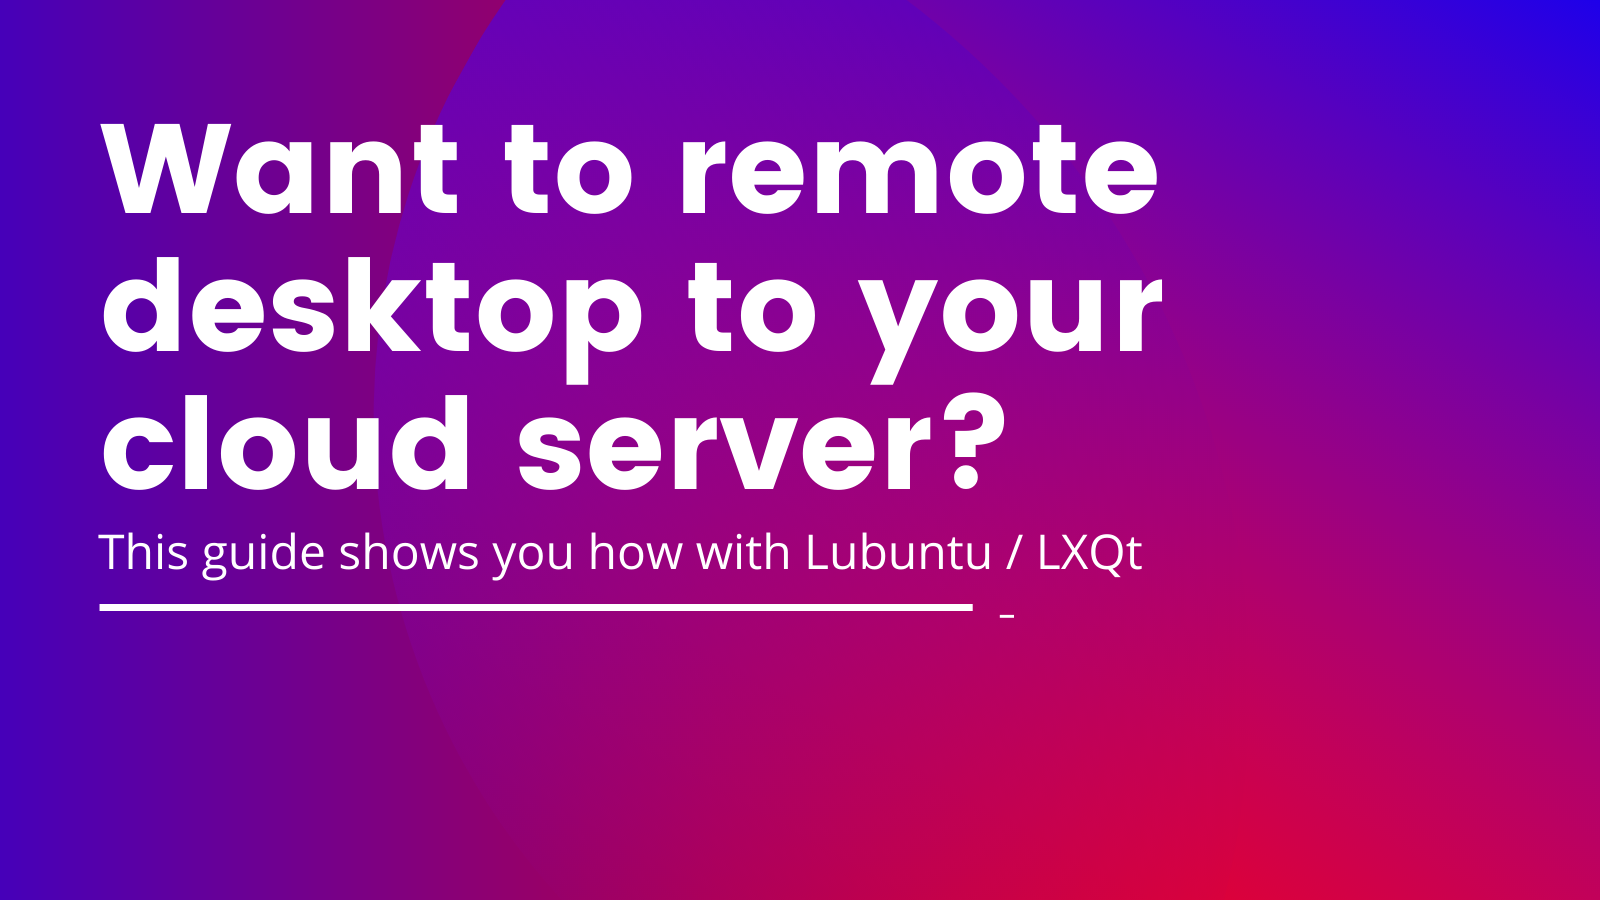 Remote desktop to your cloud server